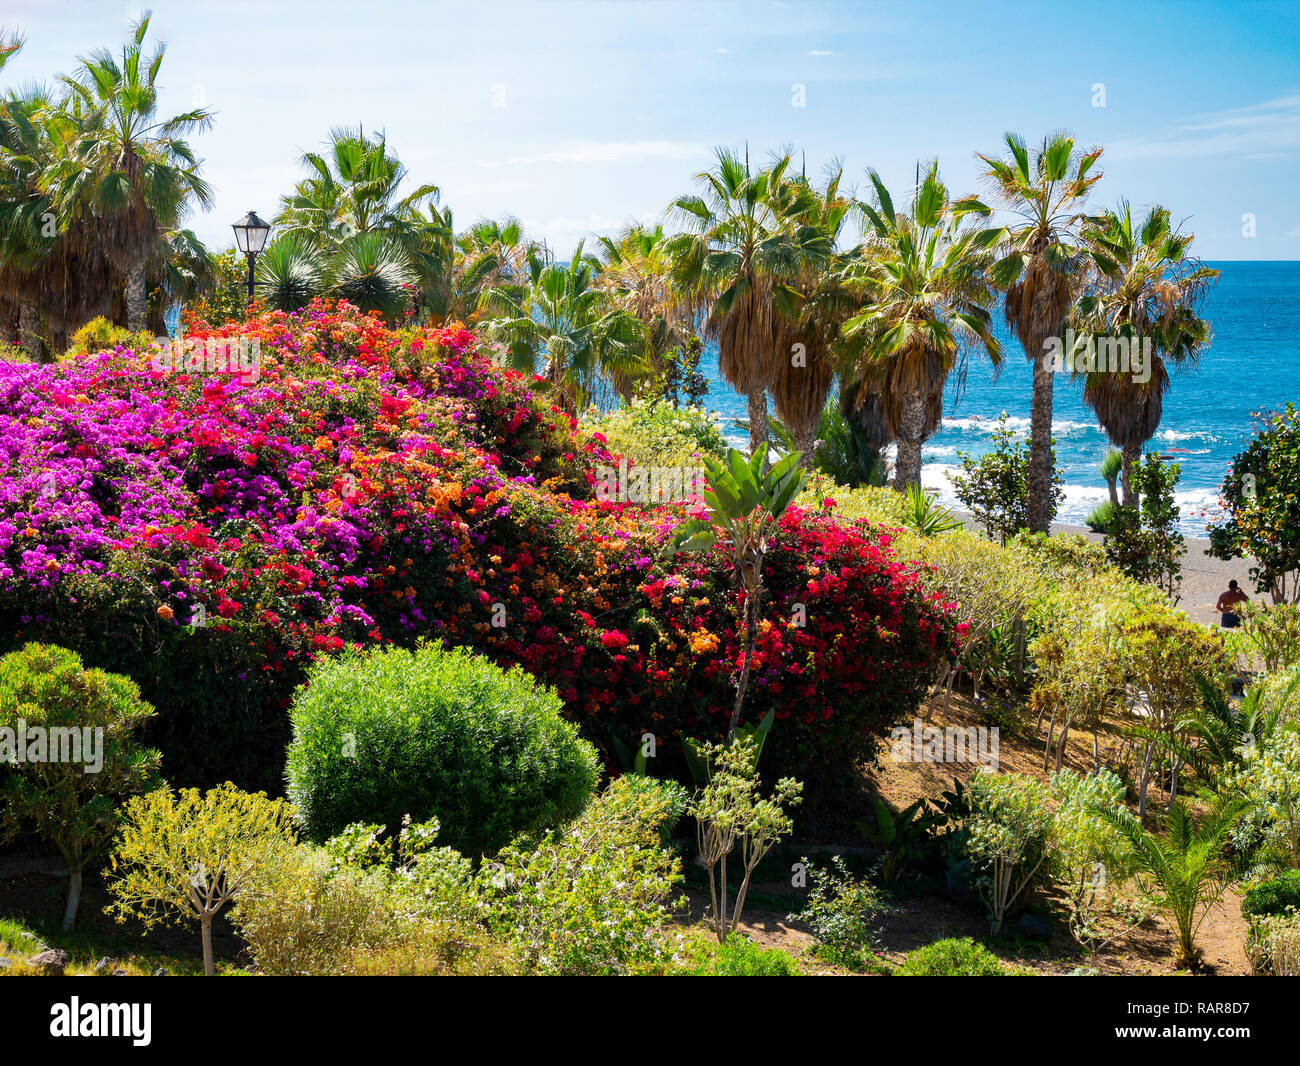 Playa Jardin beach on Tenerife Island in Spain Stock Photo